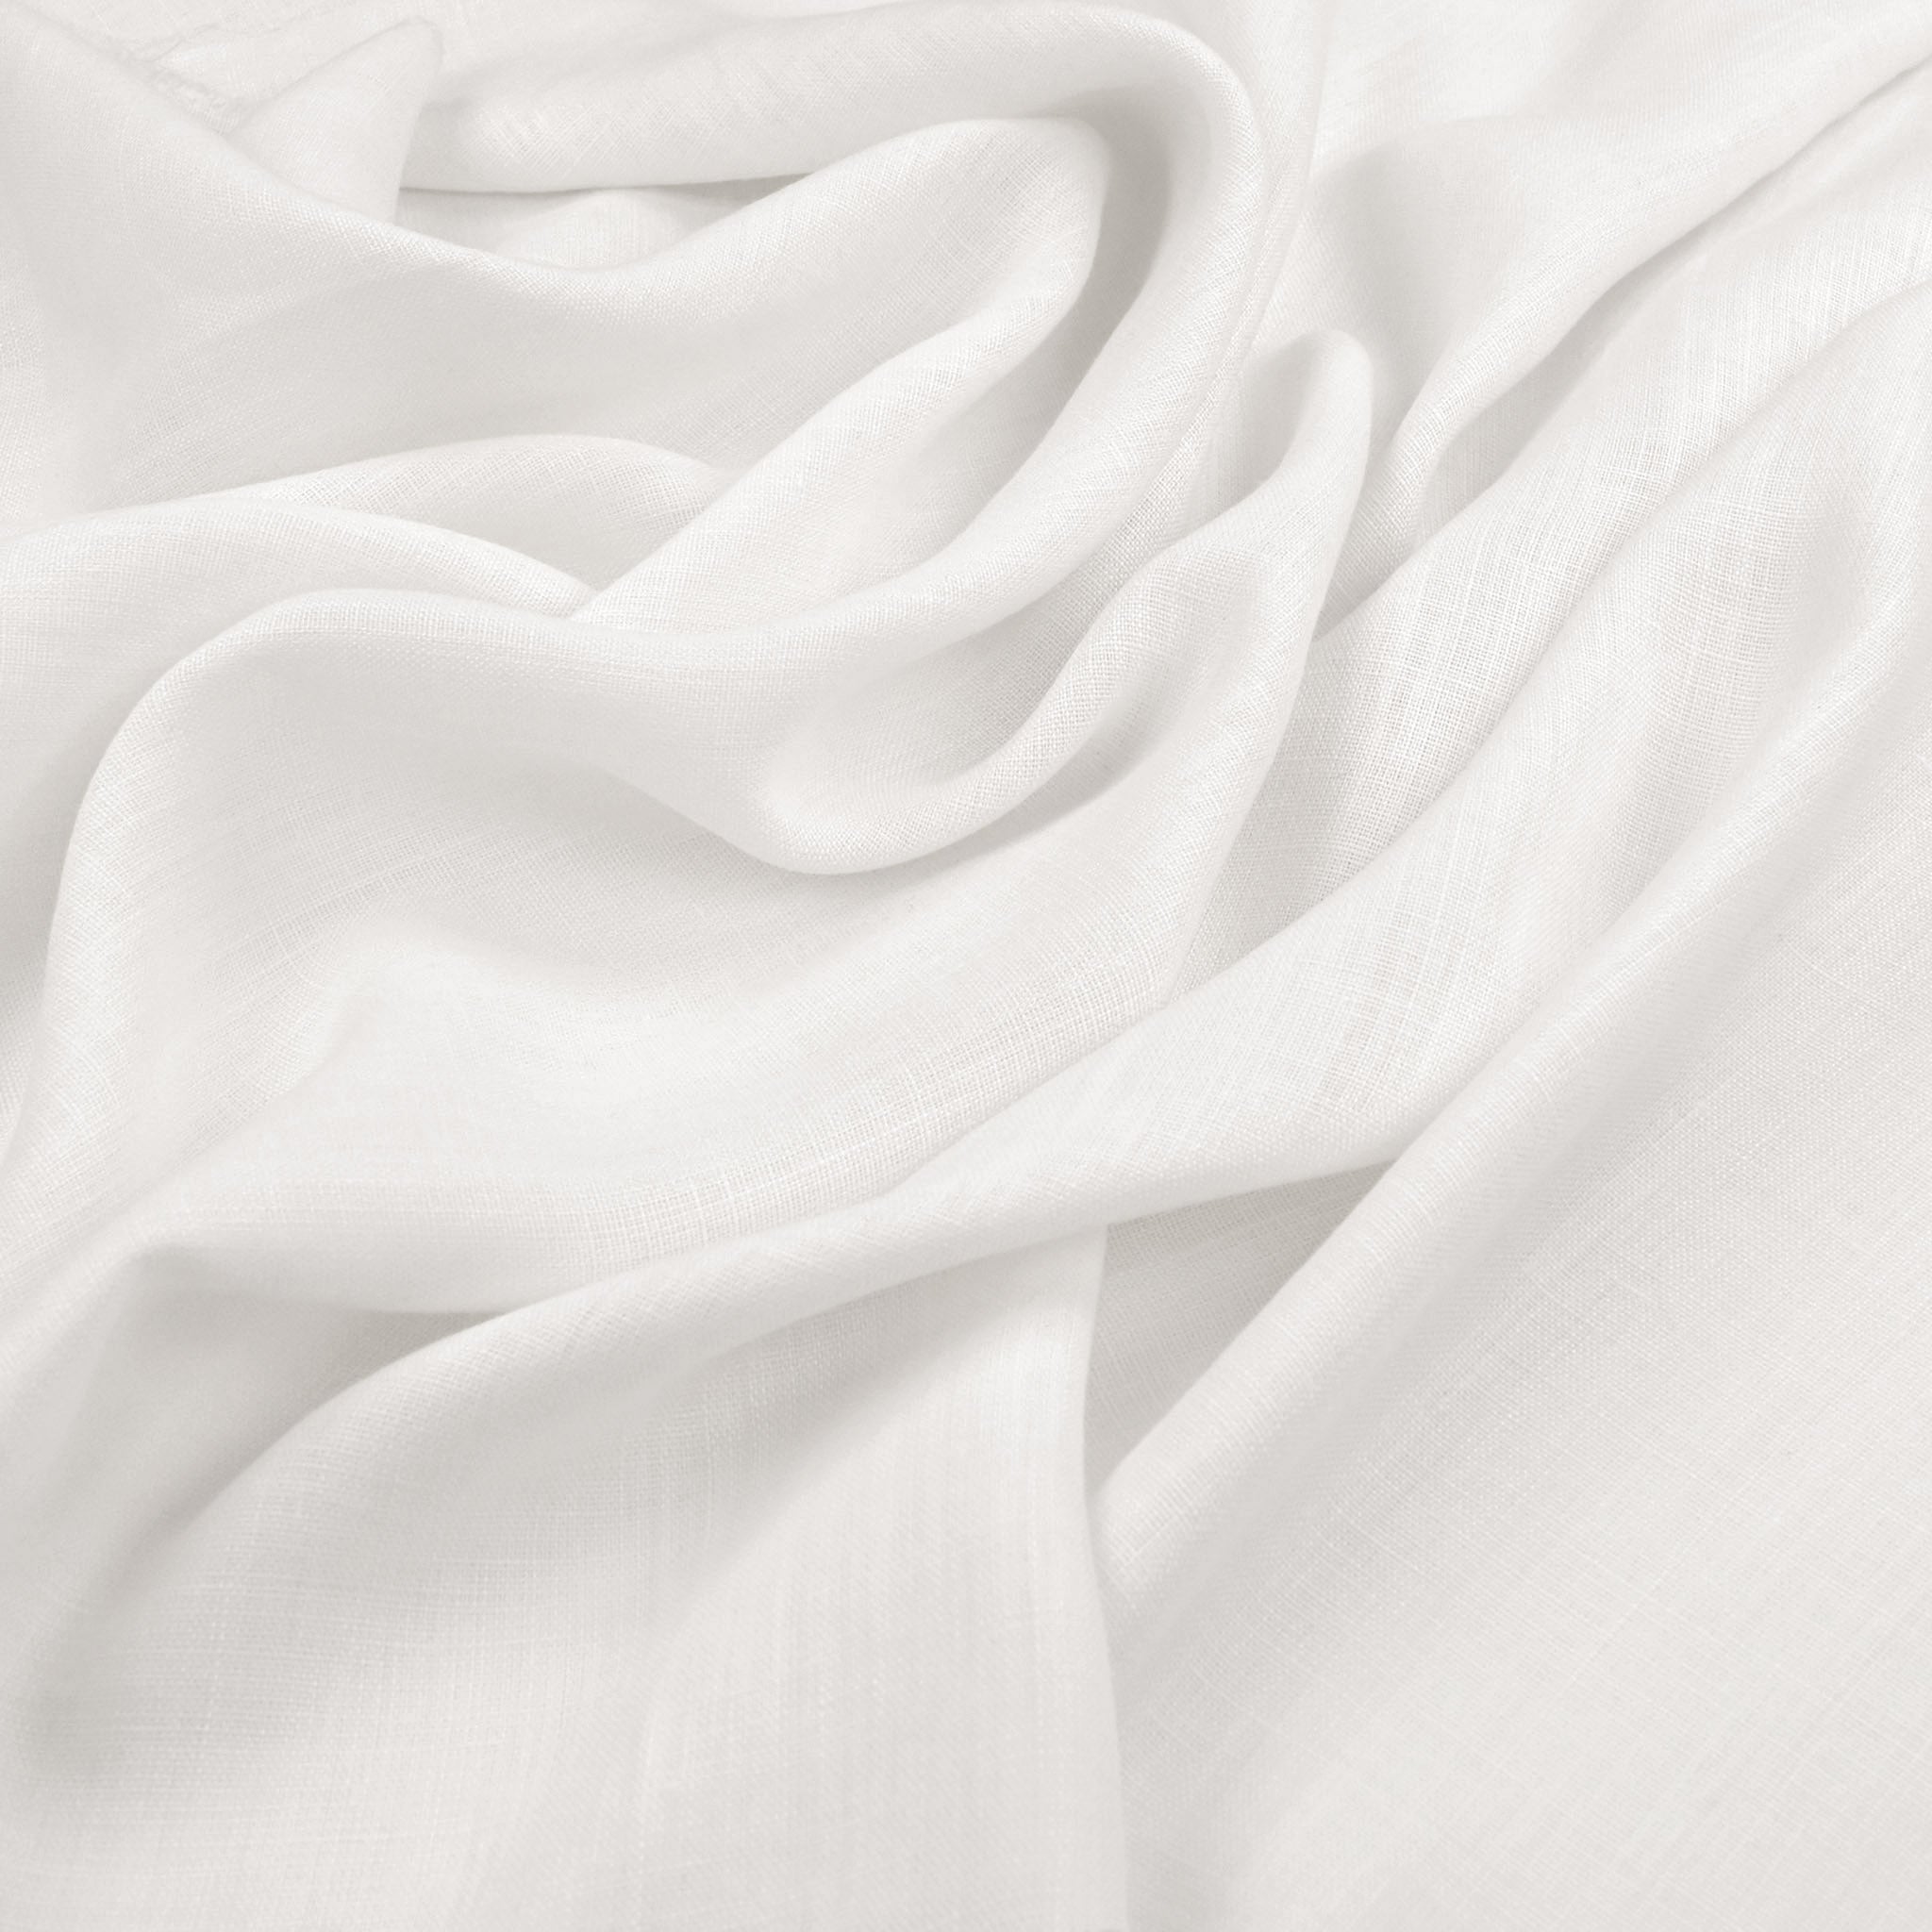 White Linen Fabric 98208